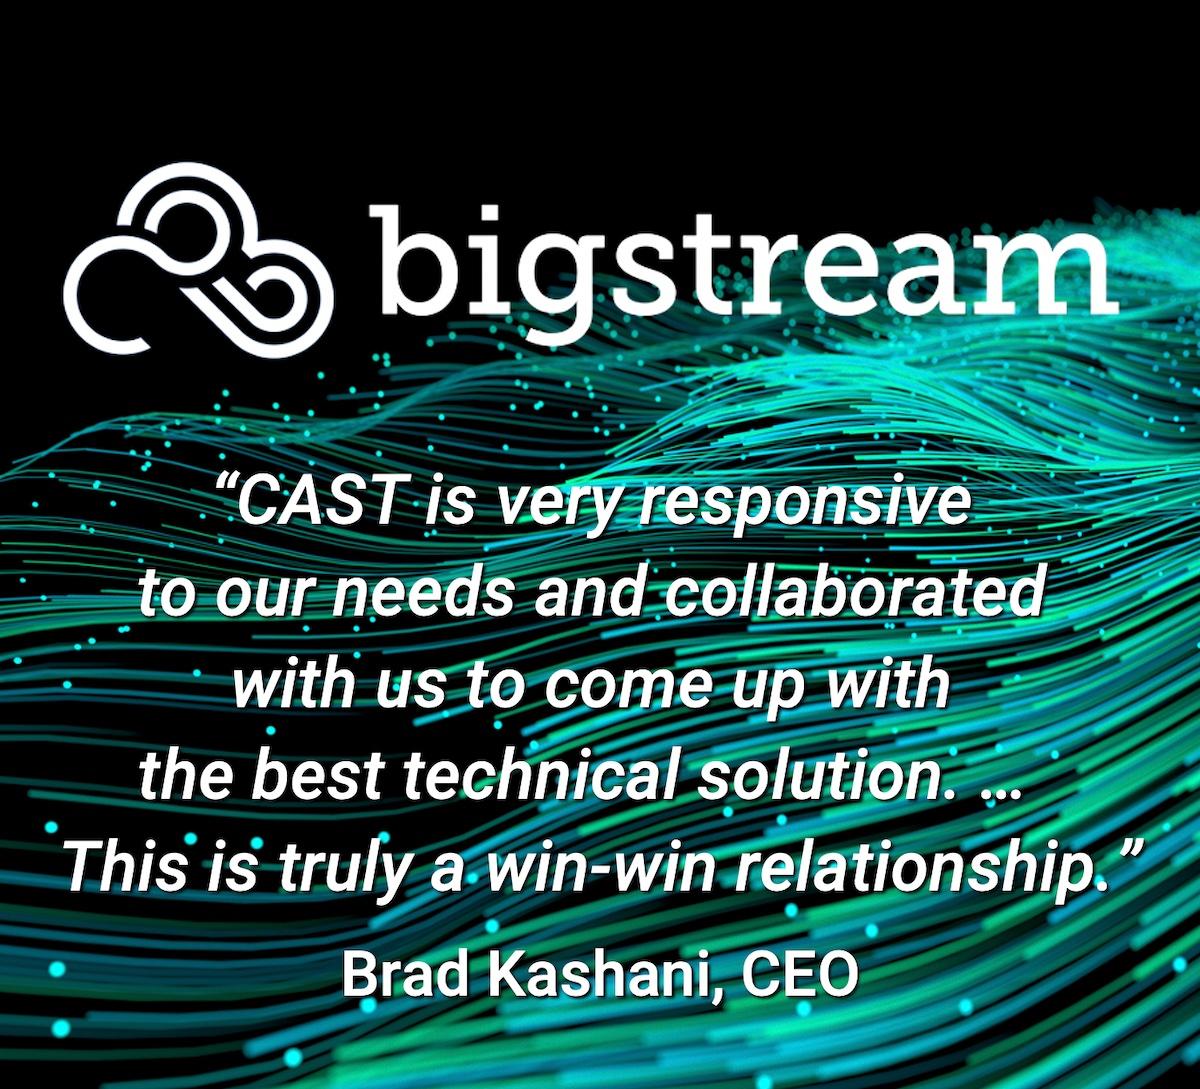 CAST IP customer BigStream's CEO uote